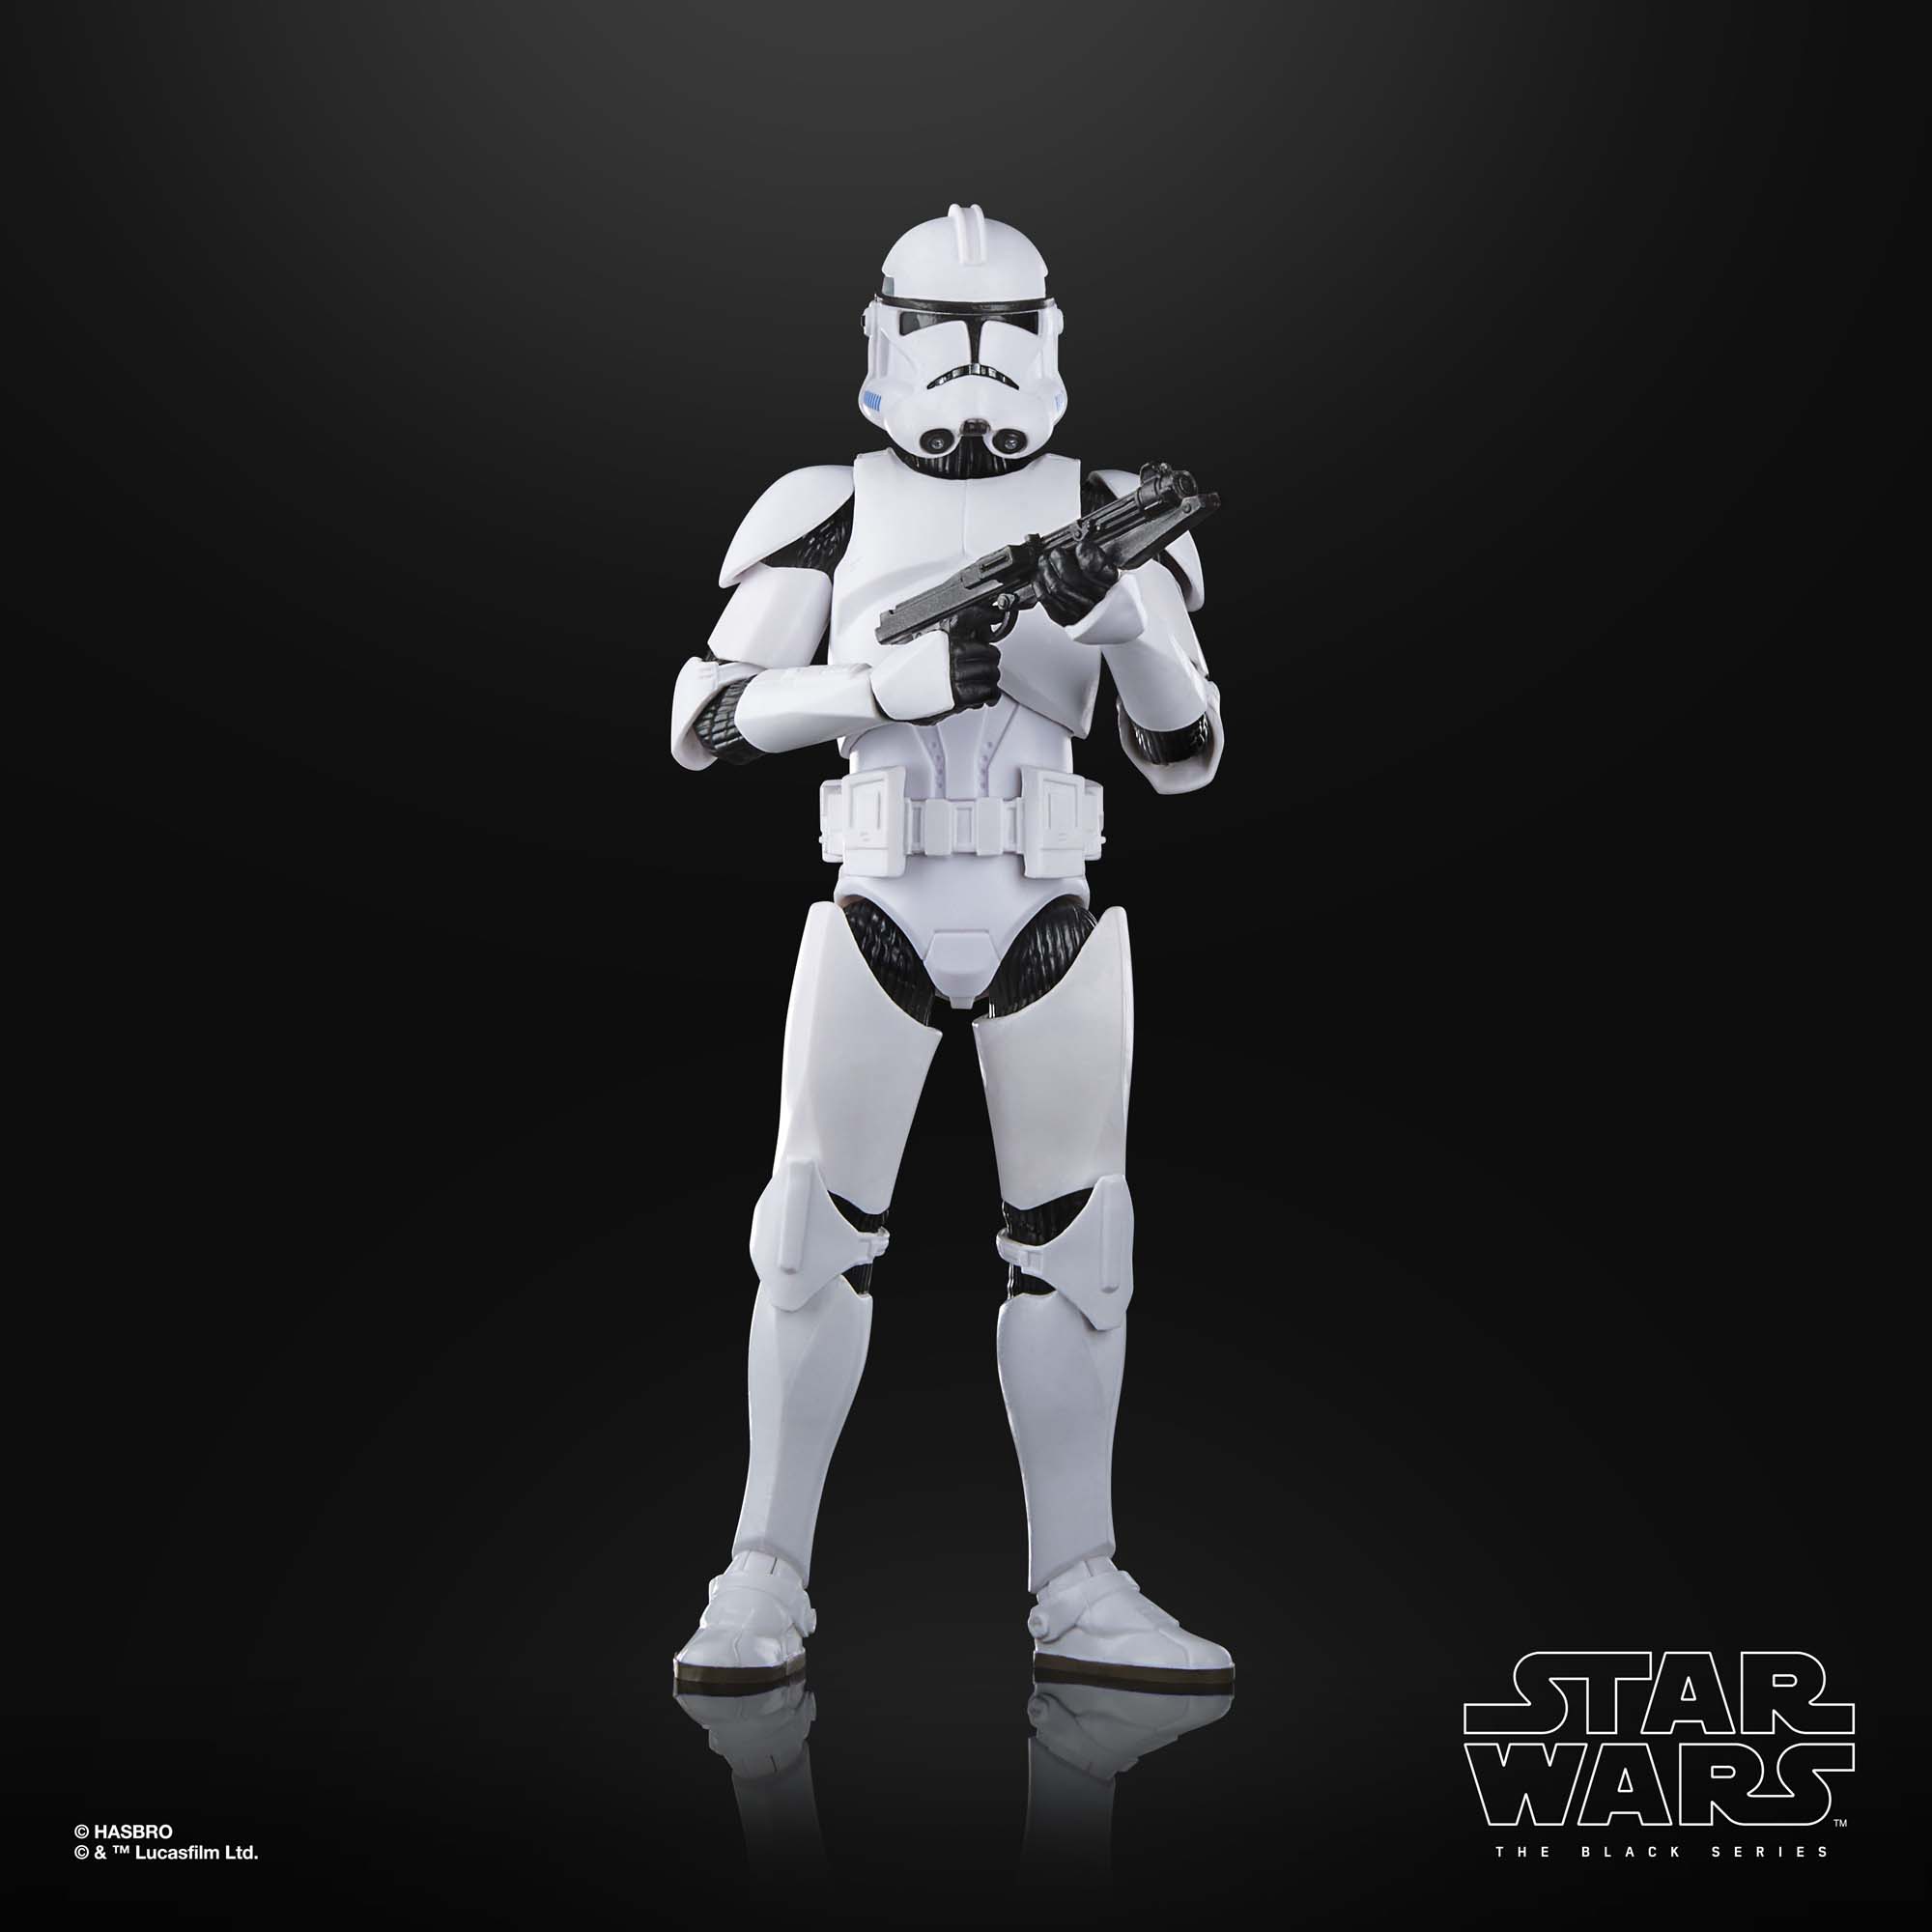 Star Wars The Black Series Phase II Clone Trooper, Star Wars Action-Figur (15 cm) F71055X0 5010996136732